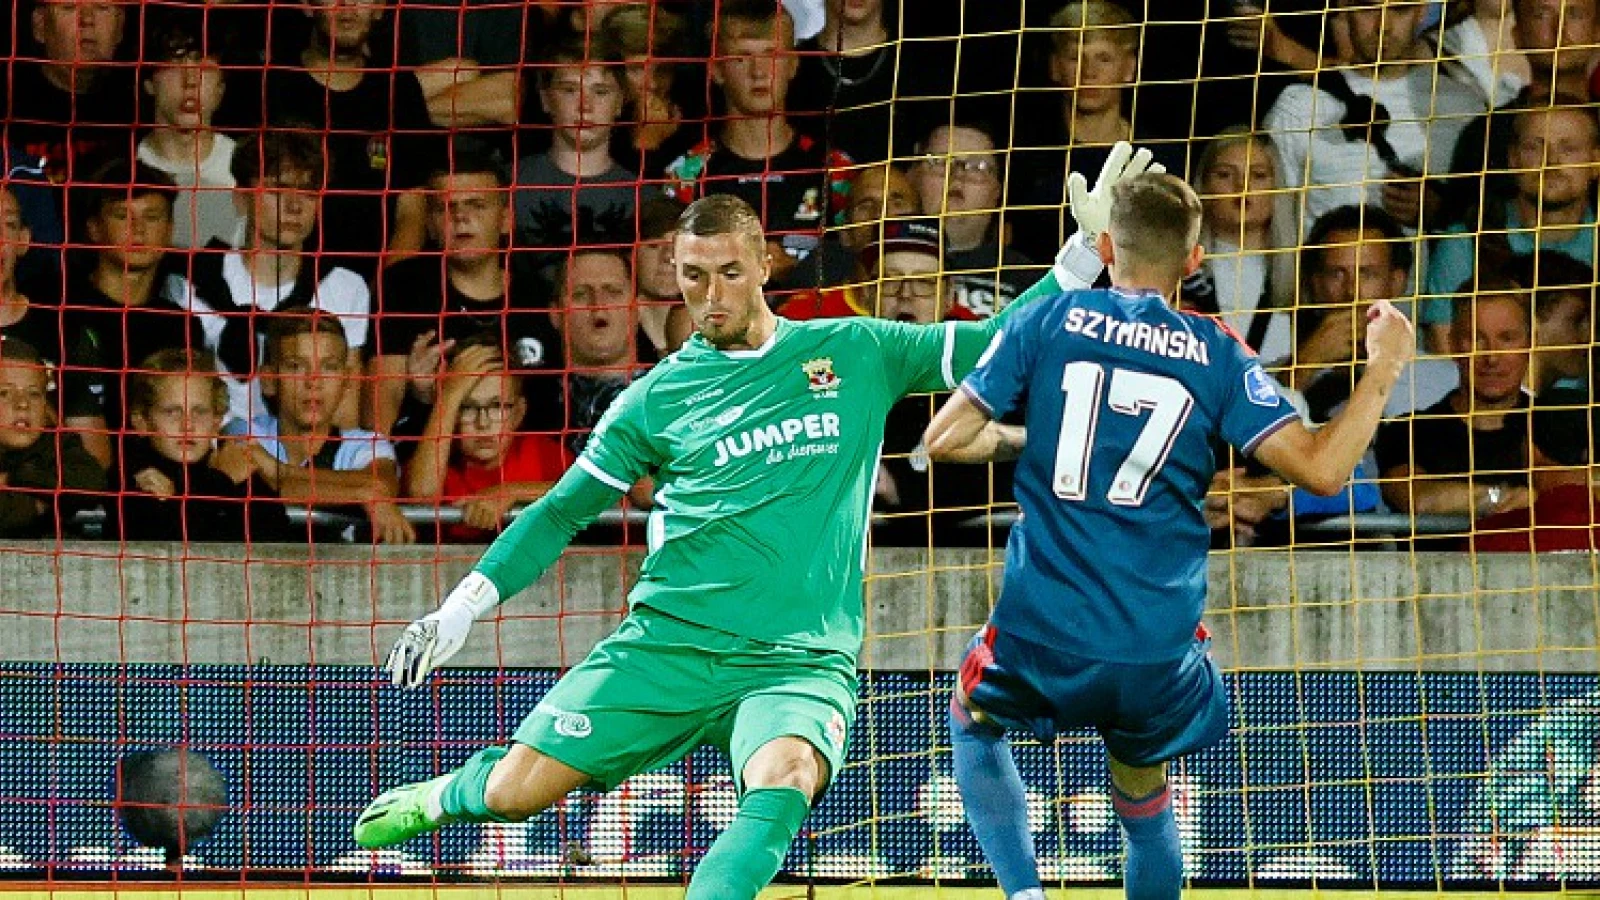 De kranten | 'Szymański gidst Feyenoord naar de overwinning'